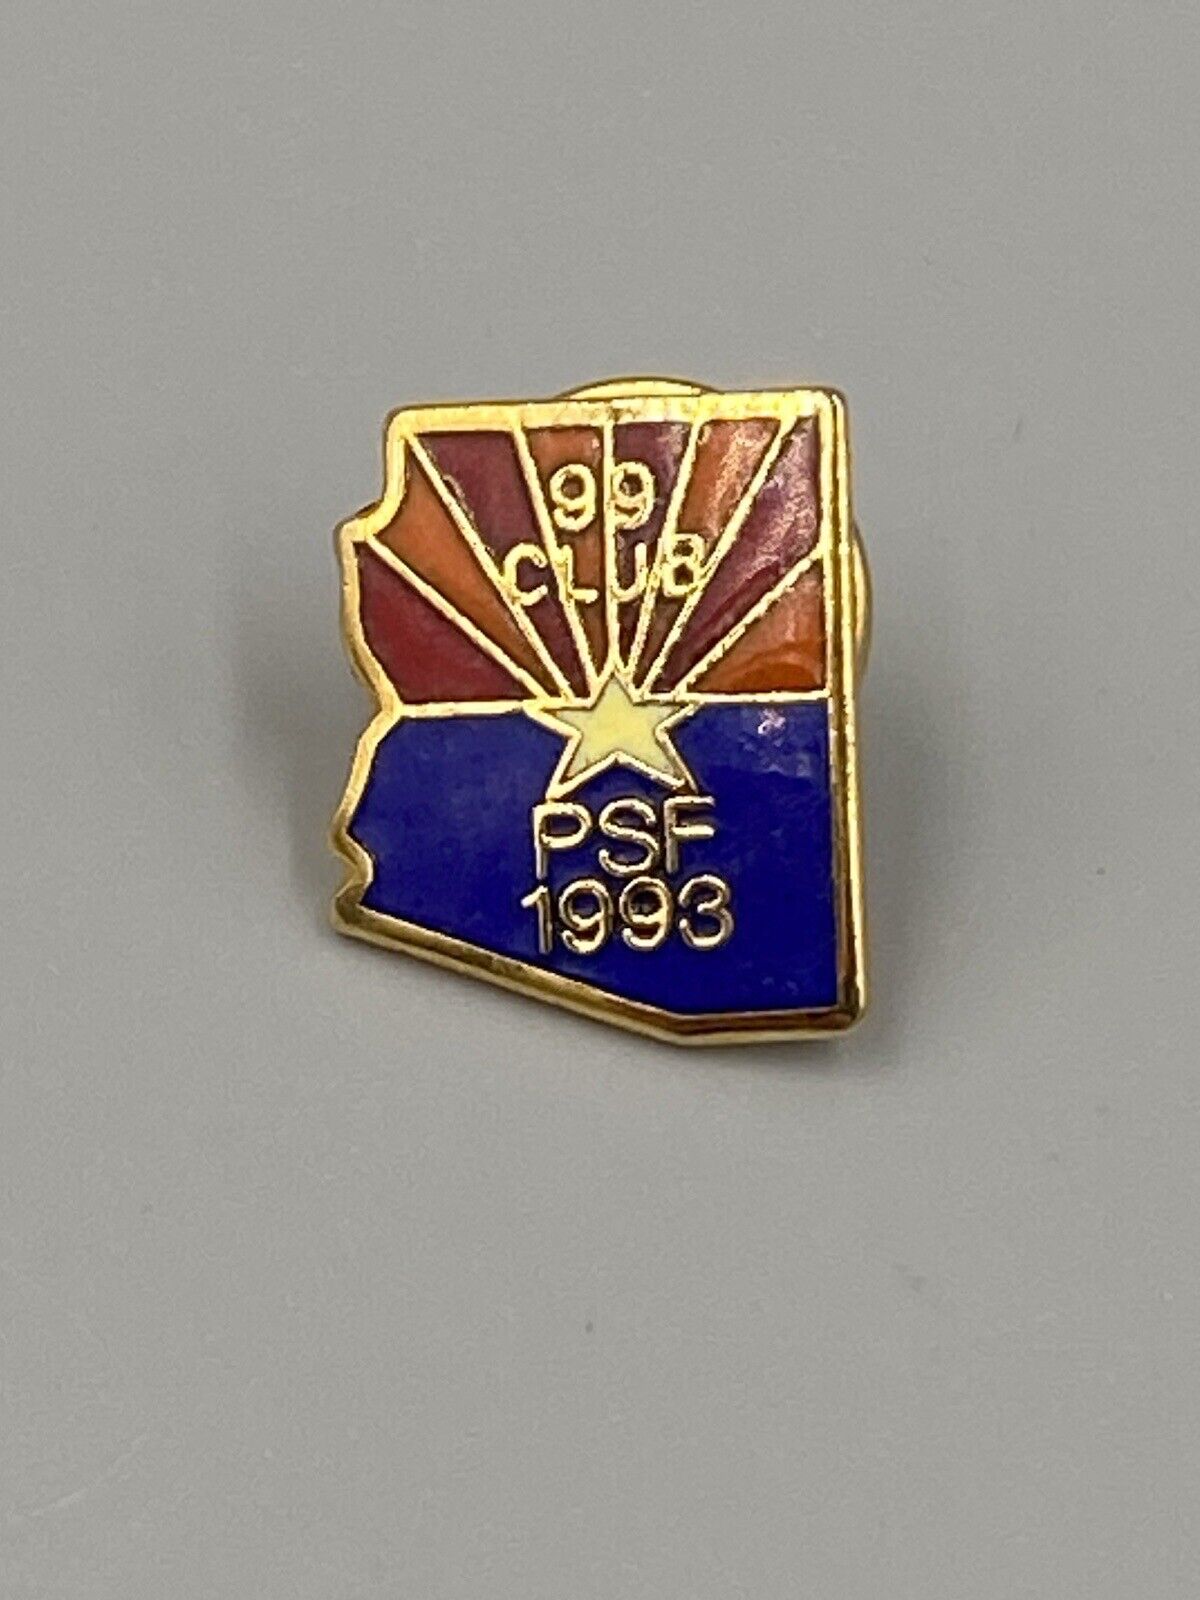 Vintage 99 Club PSF 1993 Lapel Hat Pin